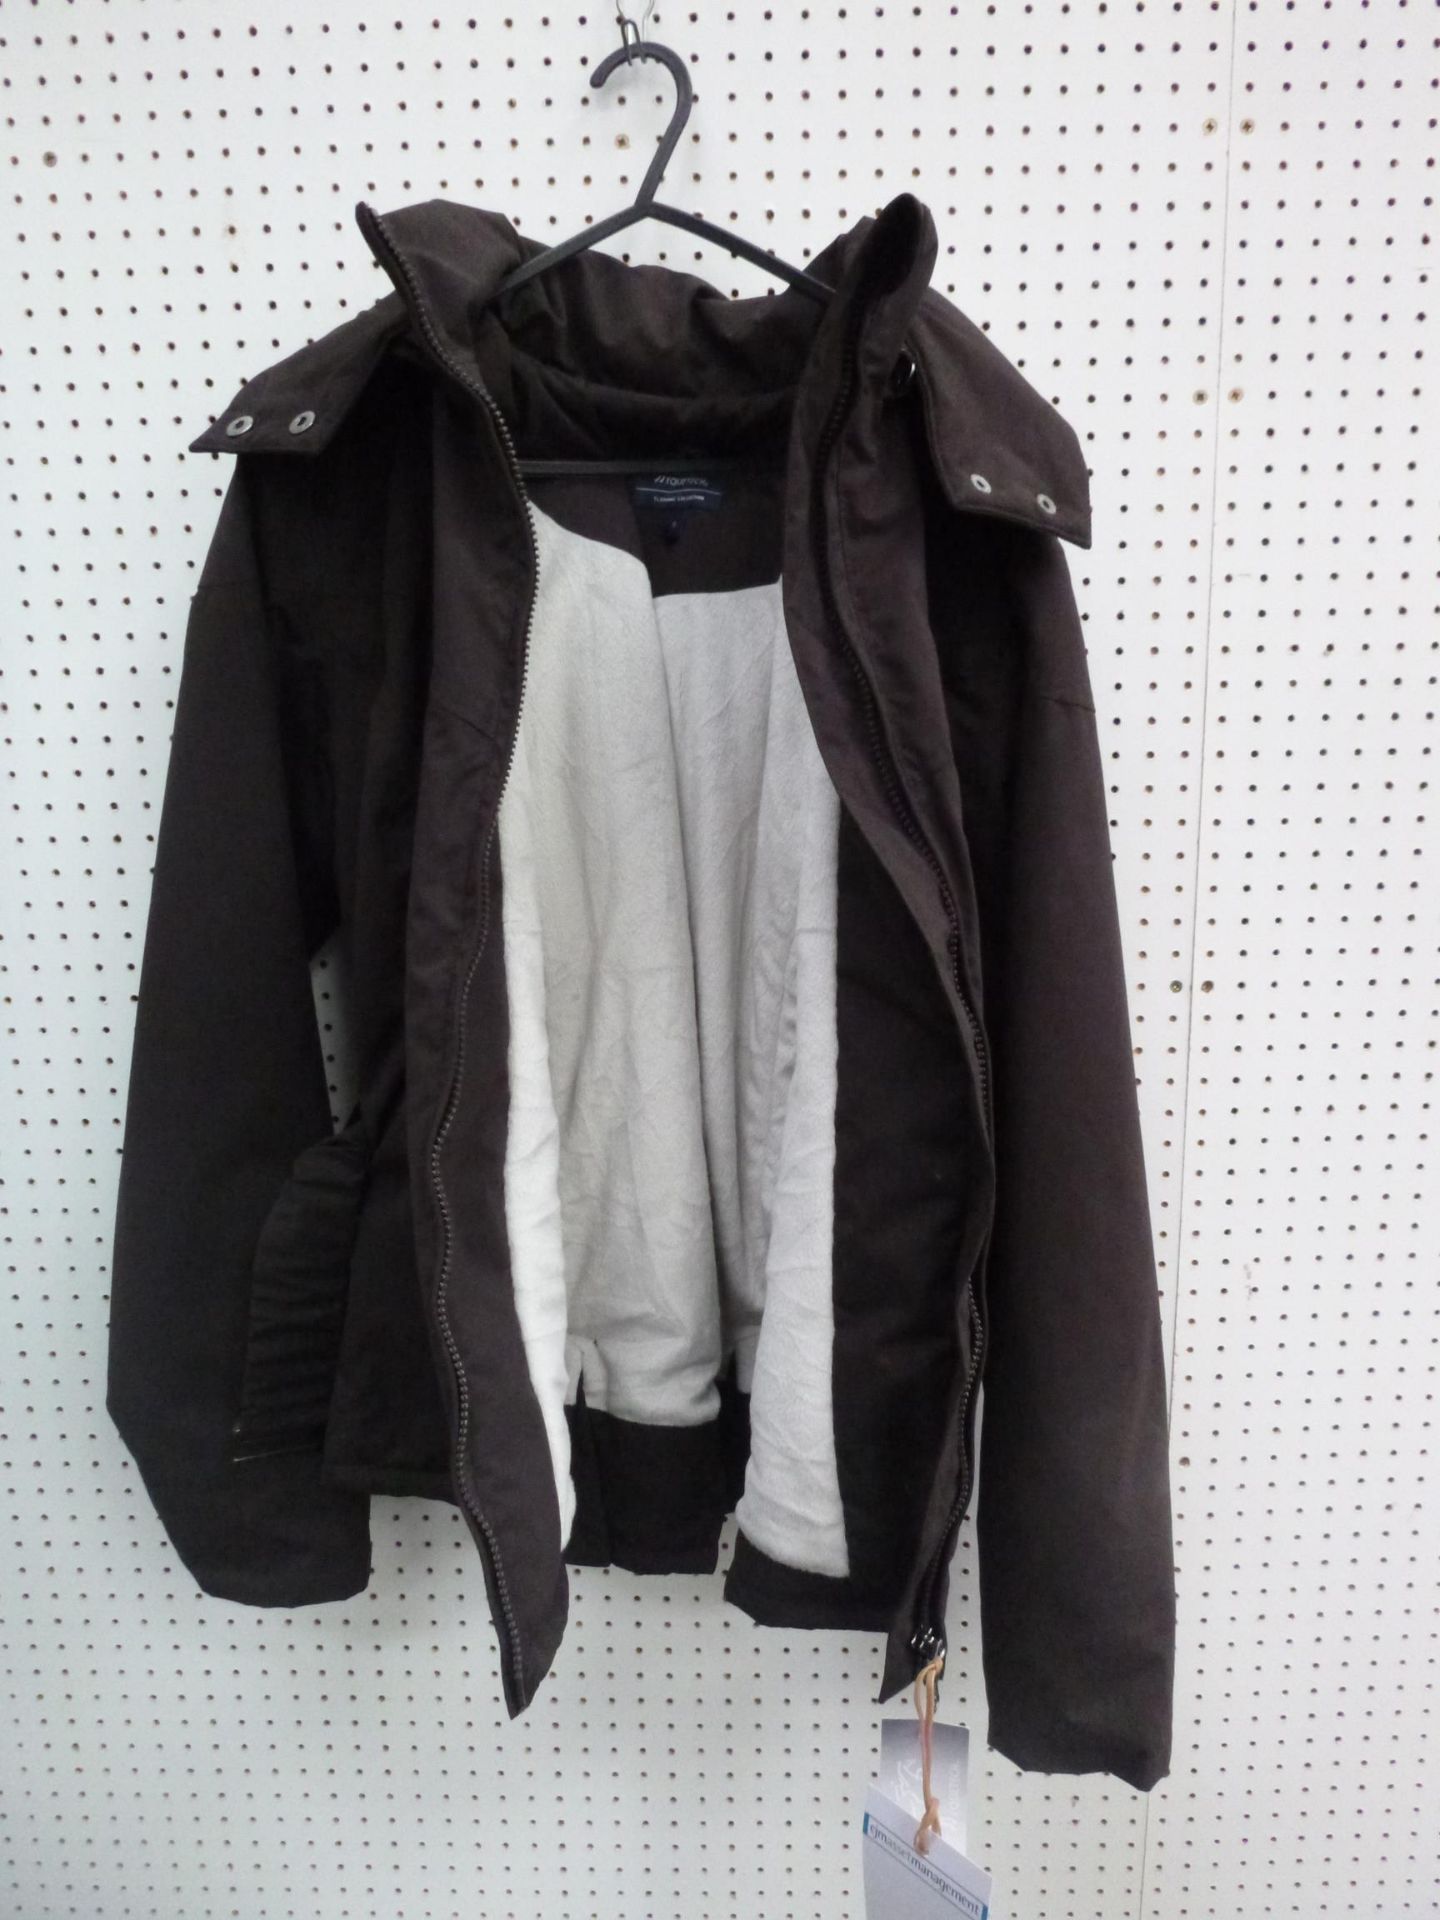 * A New Equatech Ladies Hulcott Jacket - Coco/Fur Size S RRP £85.95 - Bild 2 aus 3